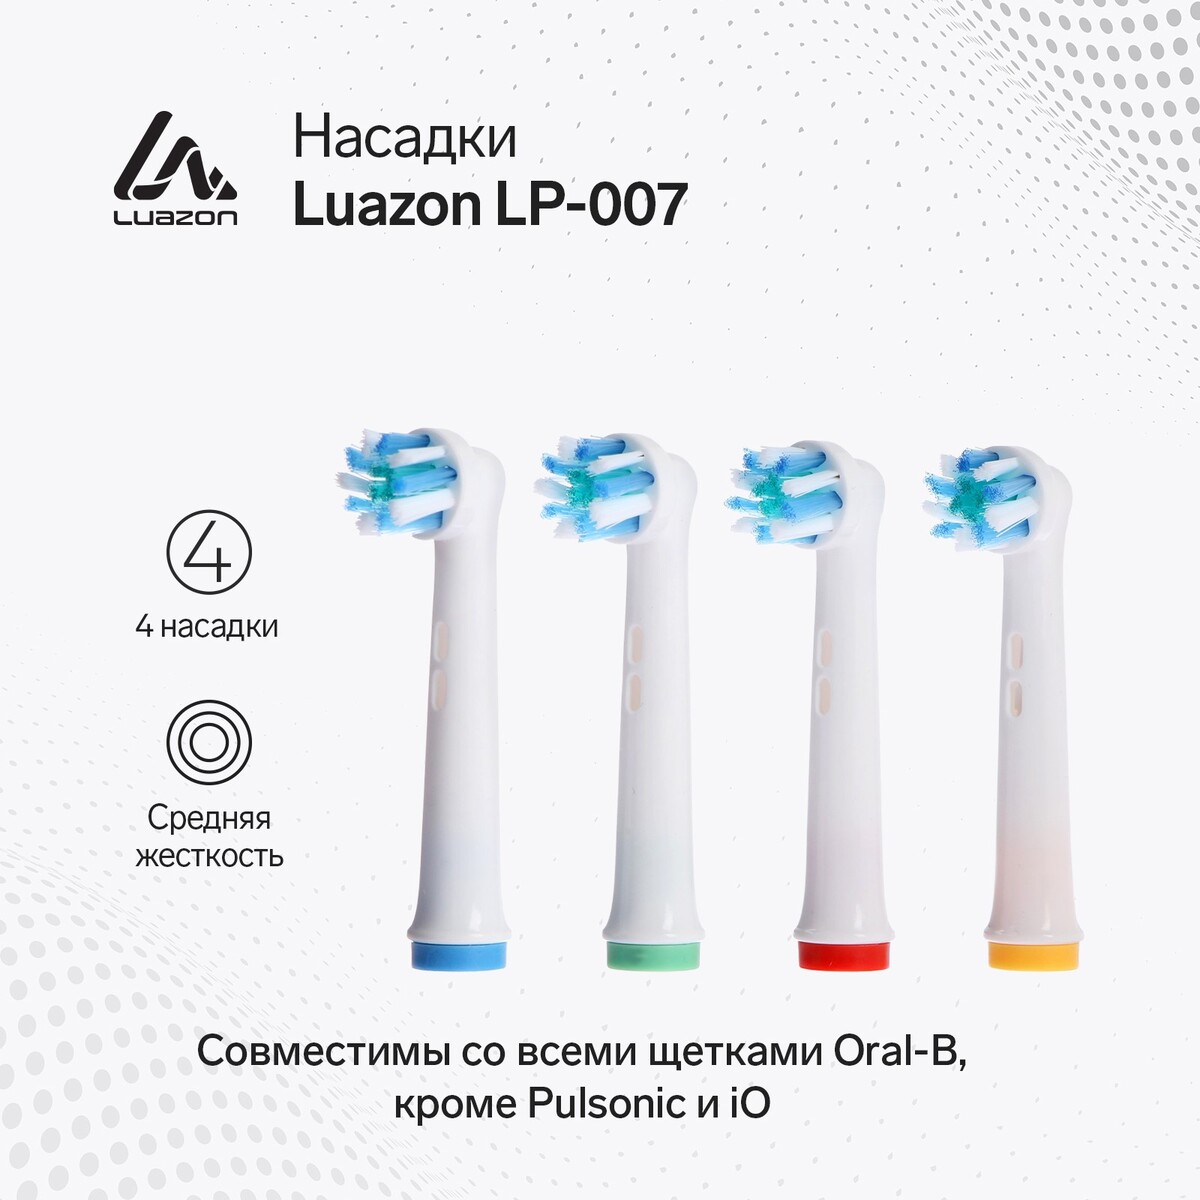  luazon lp-007,     oral b, 4 ,  